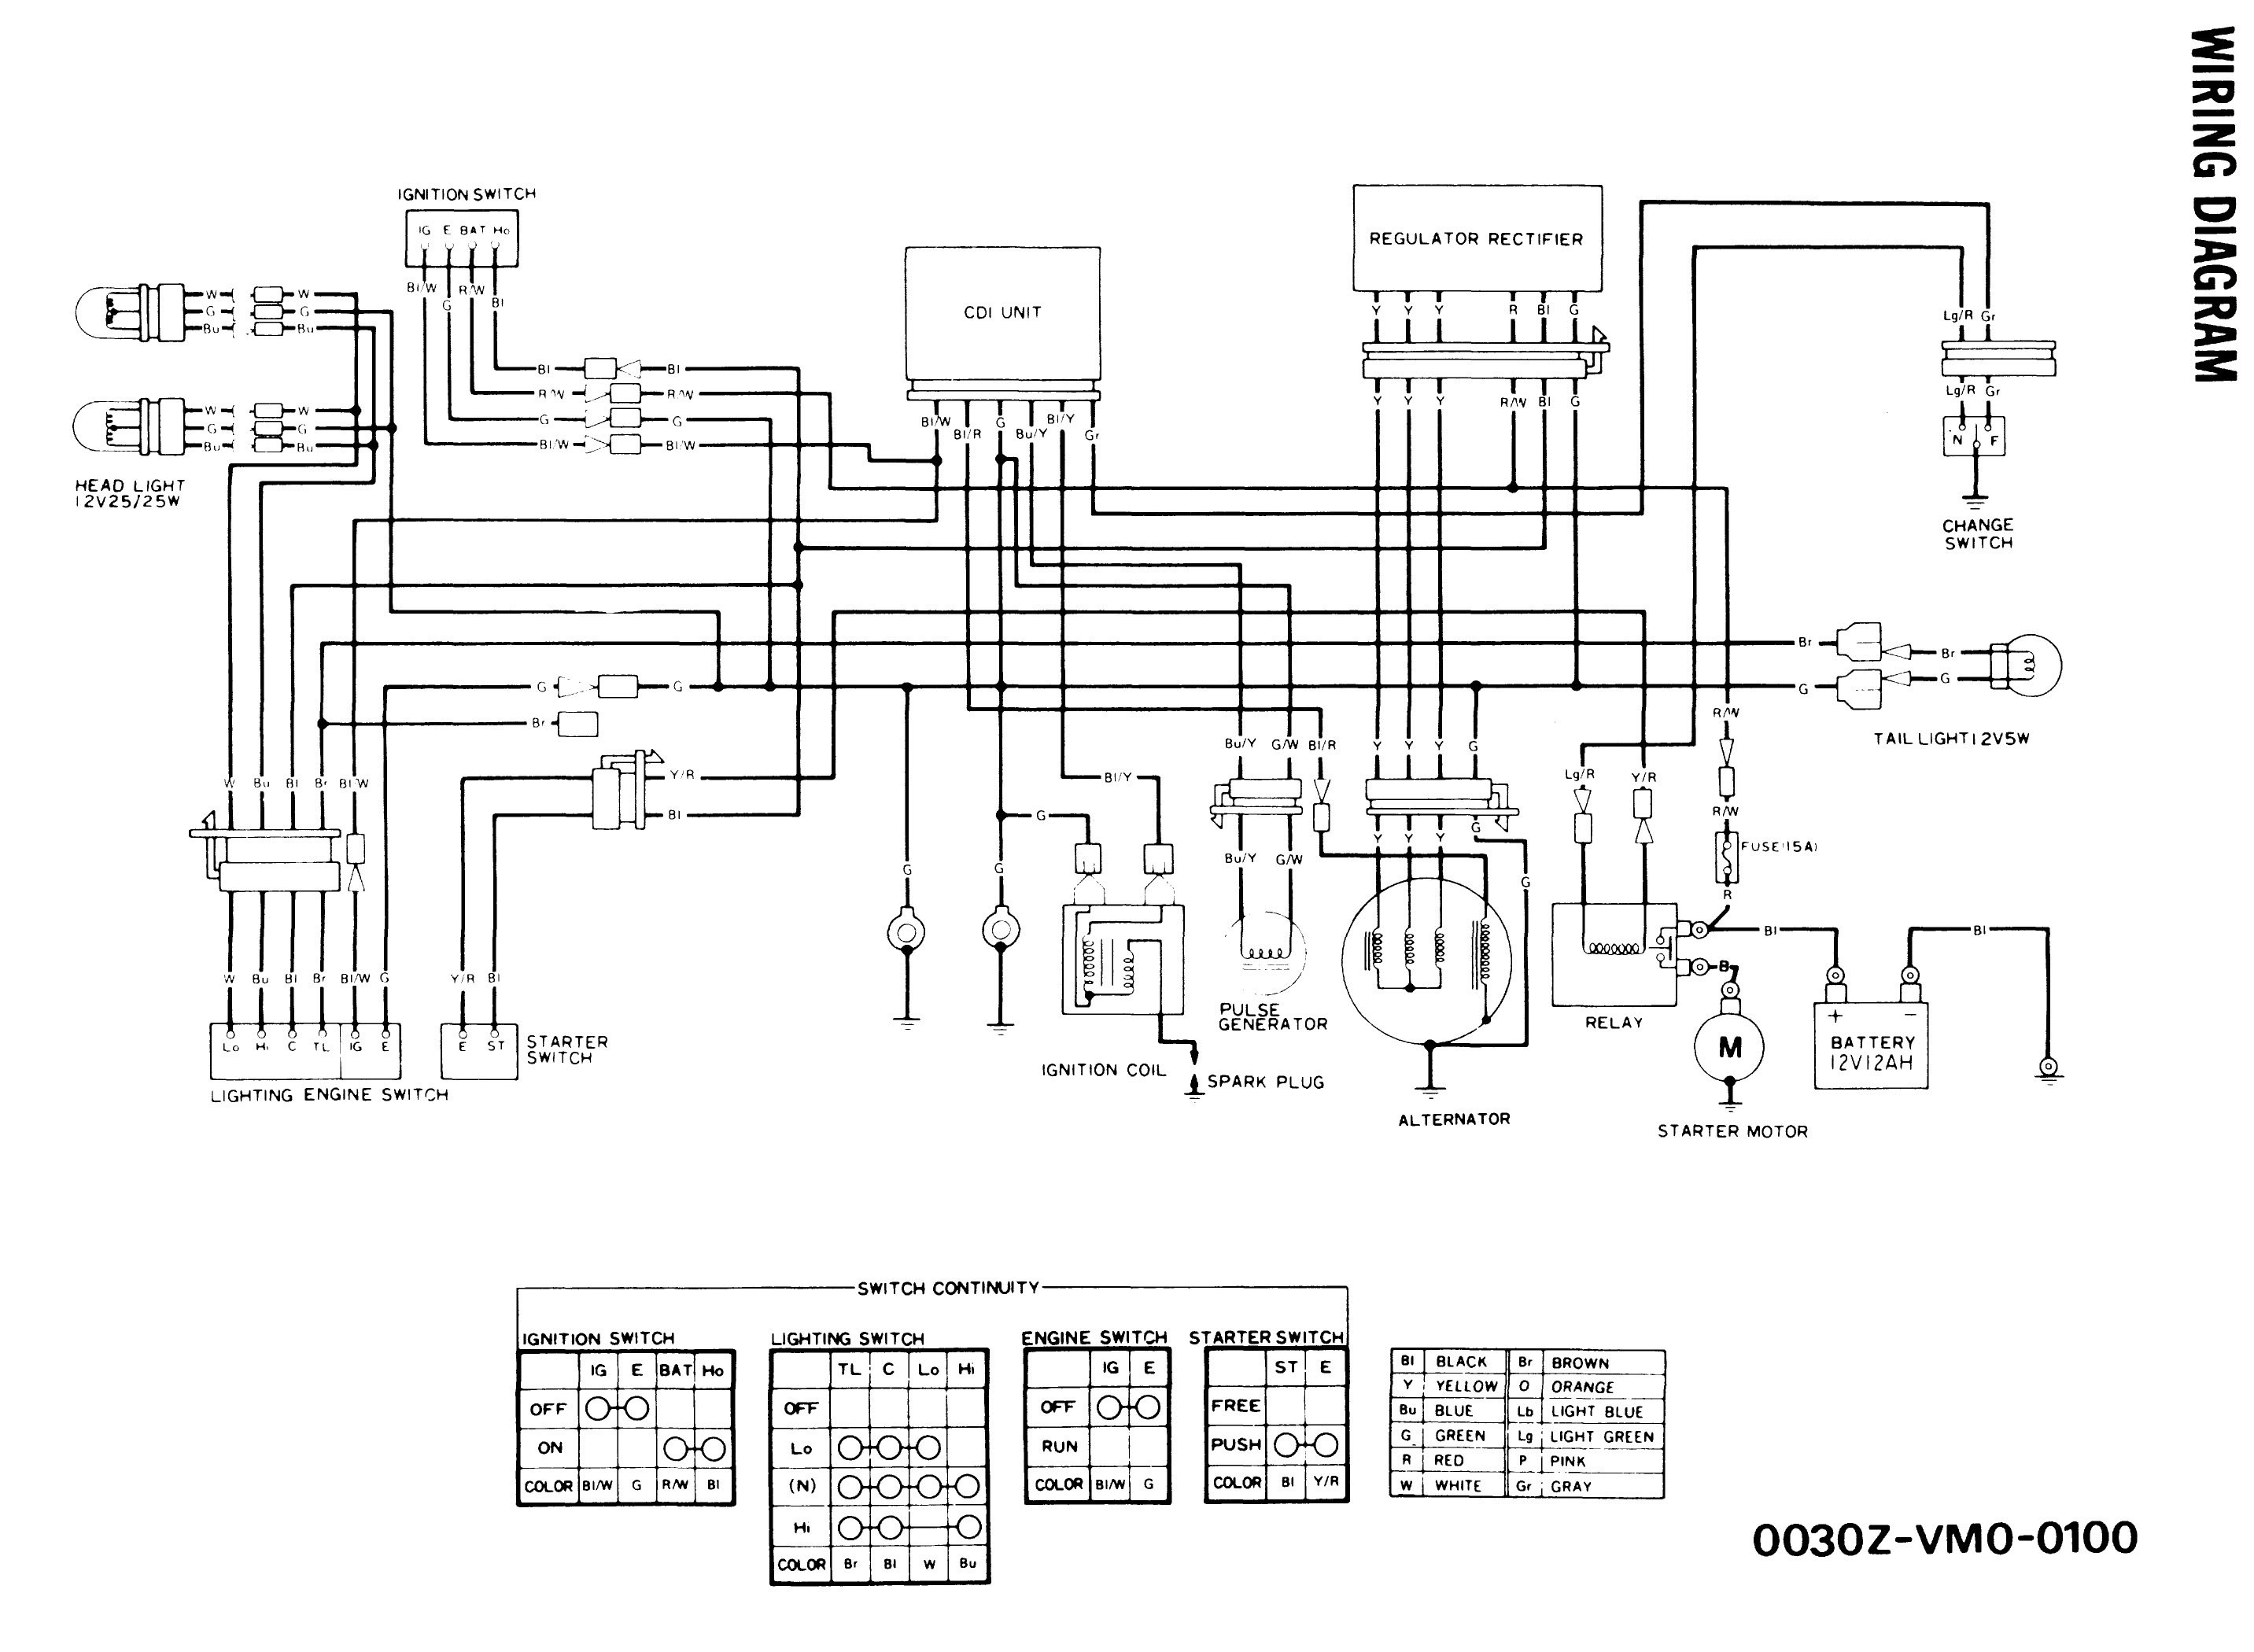 2003 Honda Odyssey Engine Wiring Schematic 2008 Honda Odyssey Wiring Diagrams Full Hd Version Wiring Of 2003 Honda Odyssey Engine Wiring Schematic